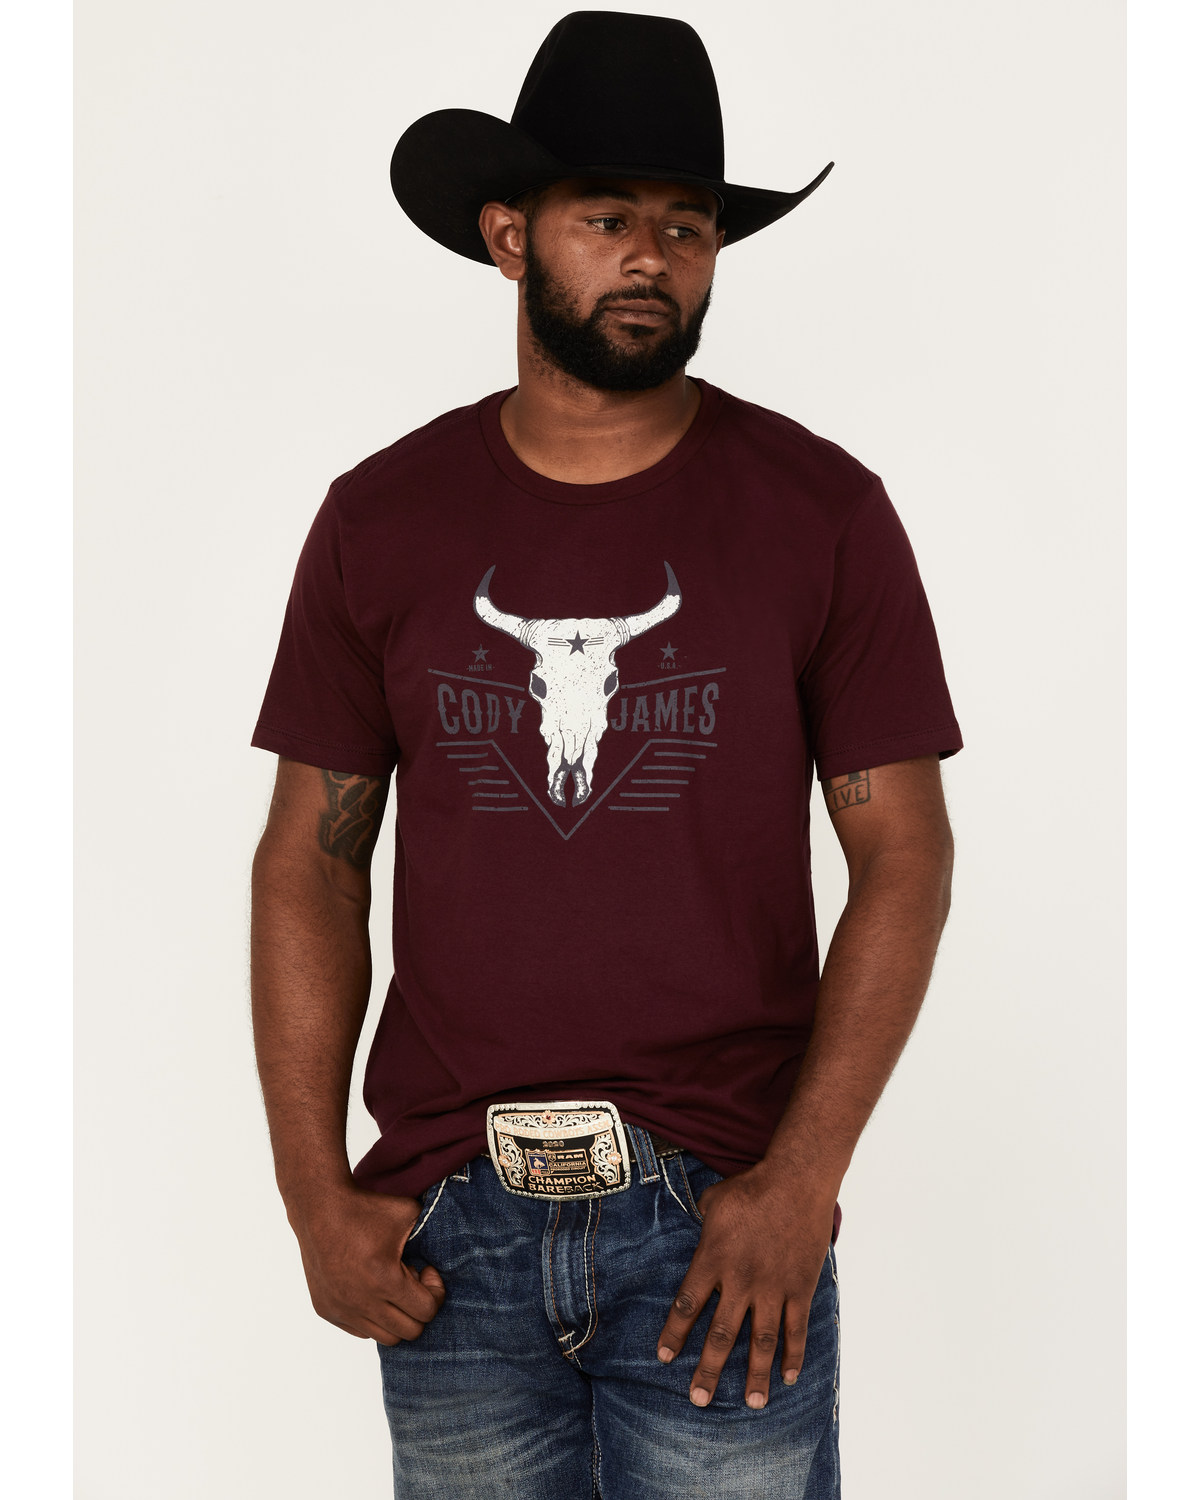 Cody James Men's Texas Coast Skull Logo Graphic Short Sleeve T-Shirt